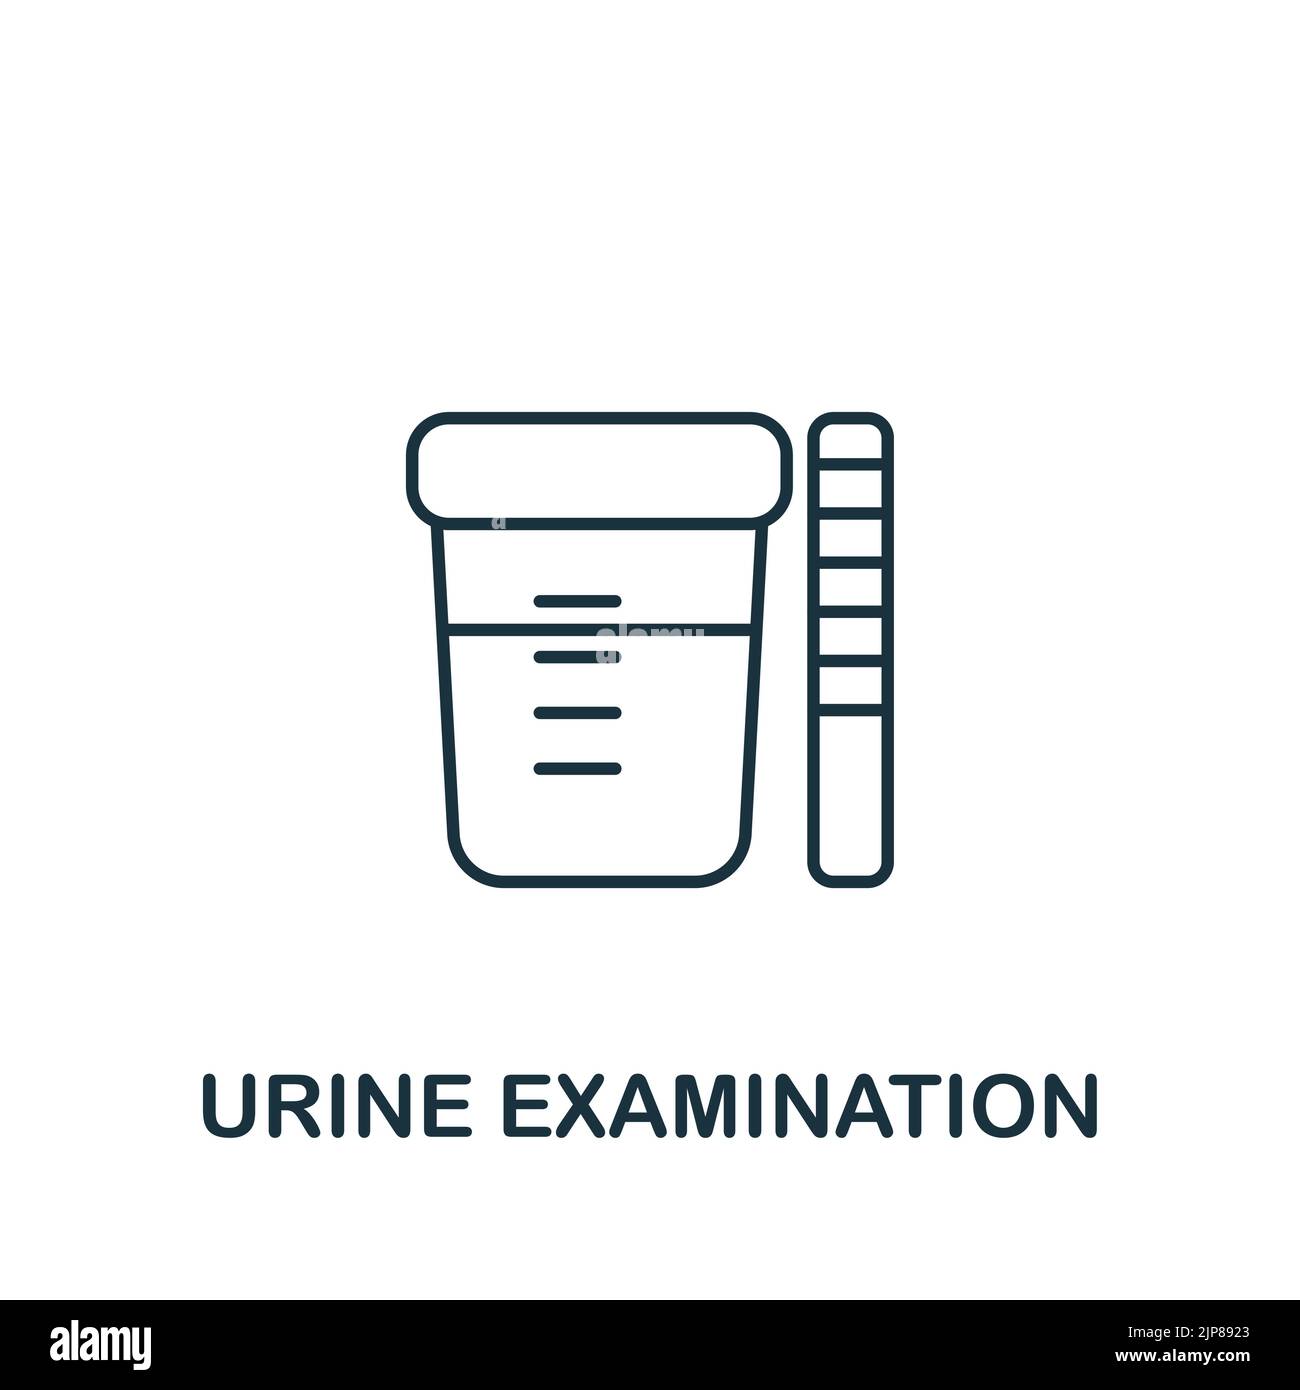 https://c8.alamy.com/comp/2JP8923/urine-examination-icon-line-simple-health-check-icon-for-templates-web-design-and-infographics-2JP8923.jpg